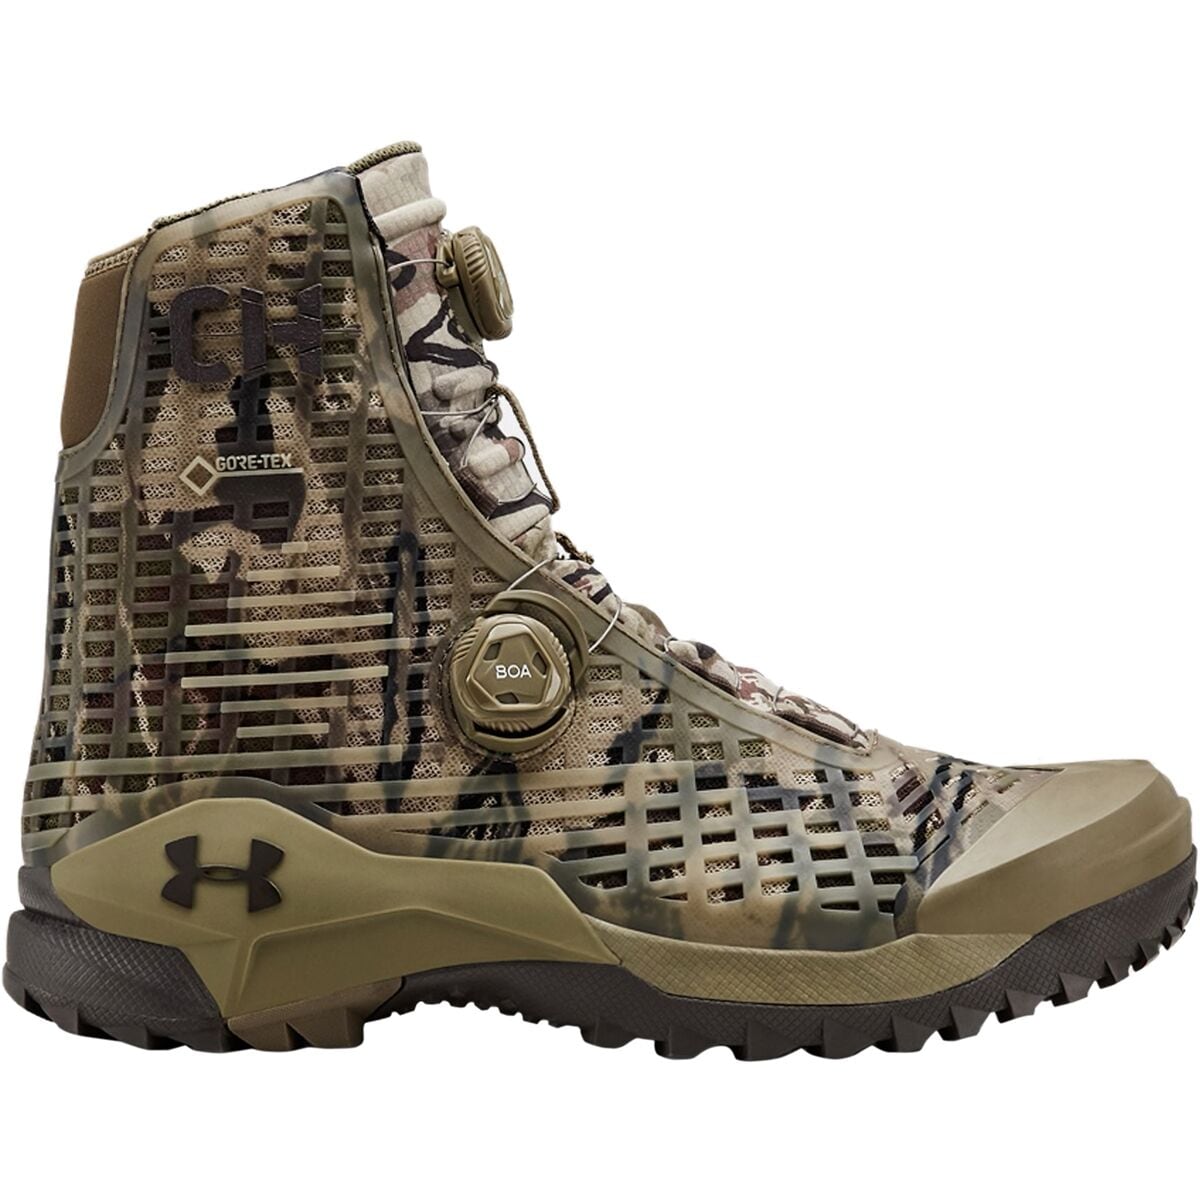 Under Armour CH1 GTX Hiking Boot - Men's